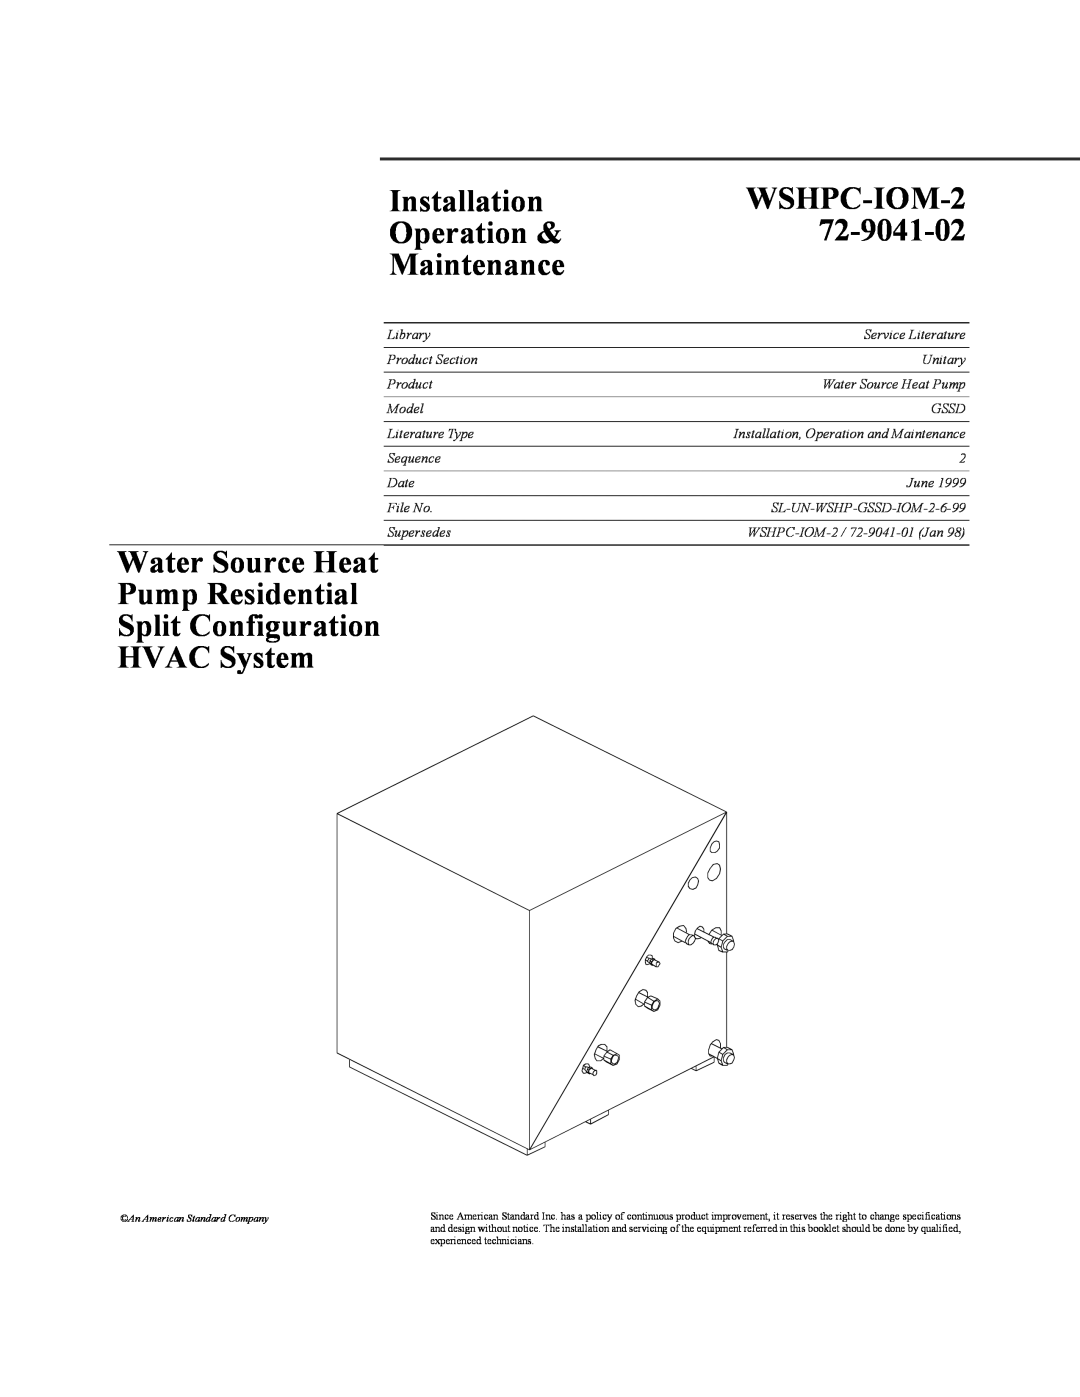 Trane GSSD specifications Installation, WSHPC-IOM-2, Operation, 72-9041-02, Maintenance, Water Source Heat, HVAC System 